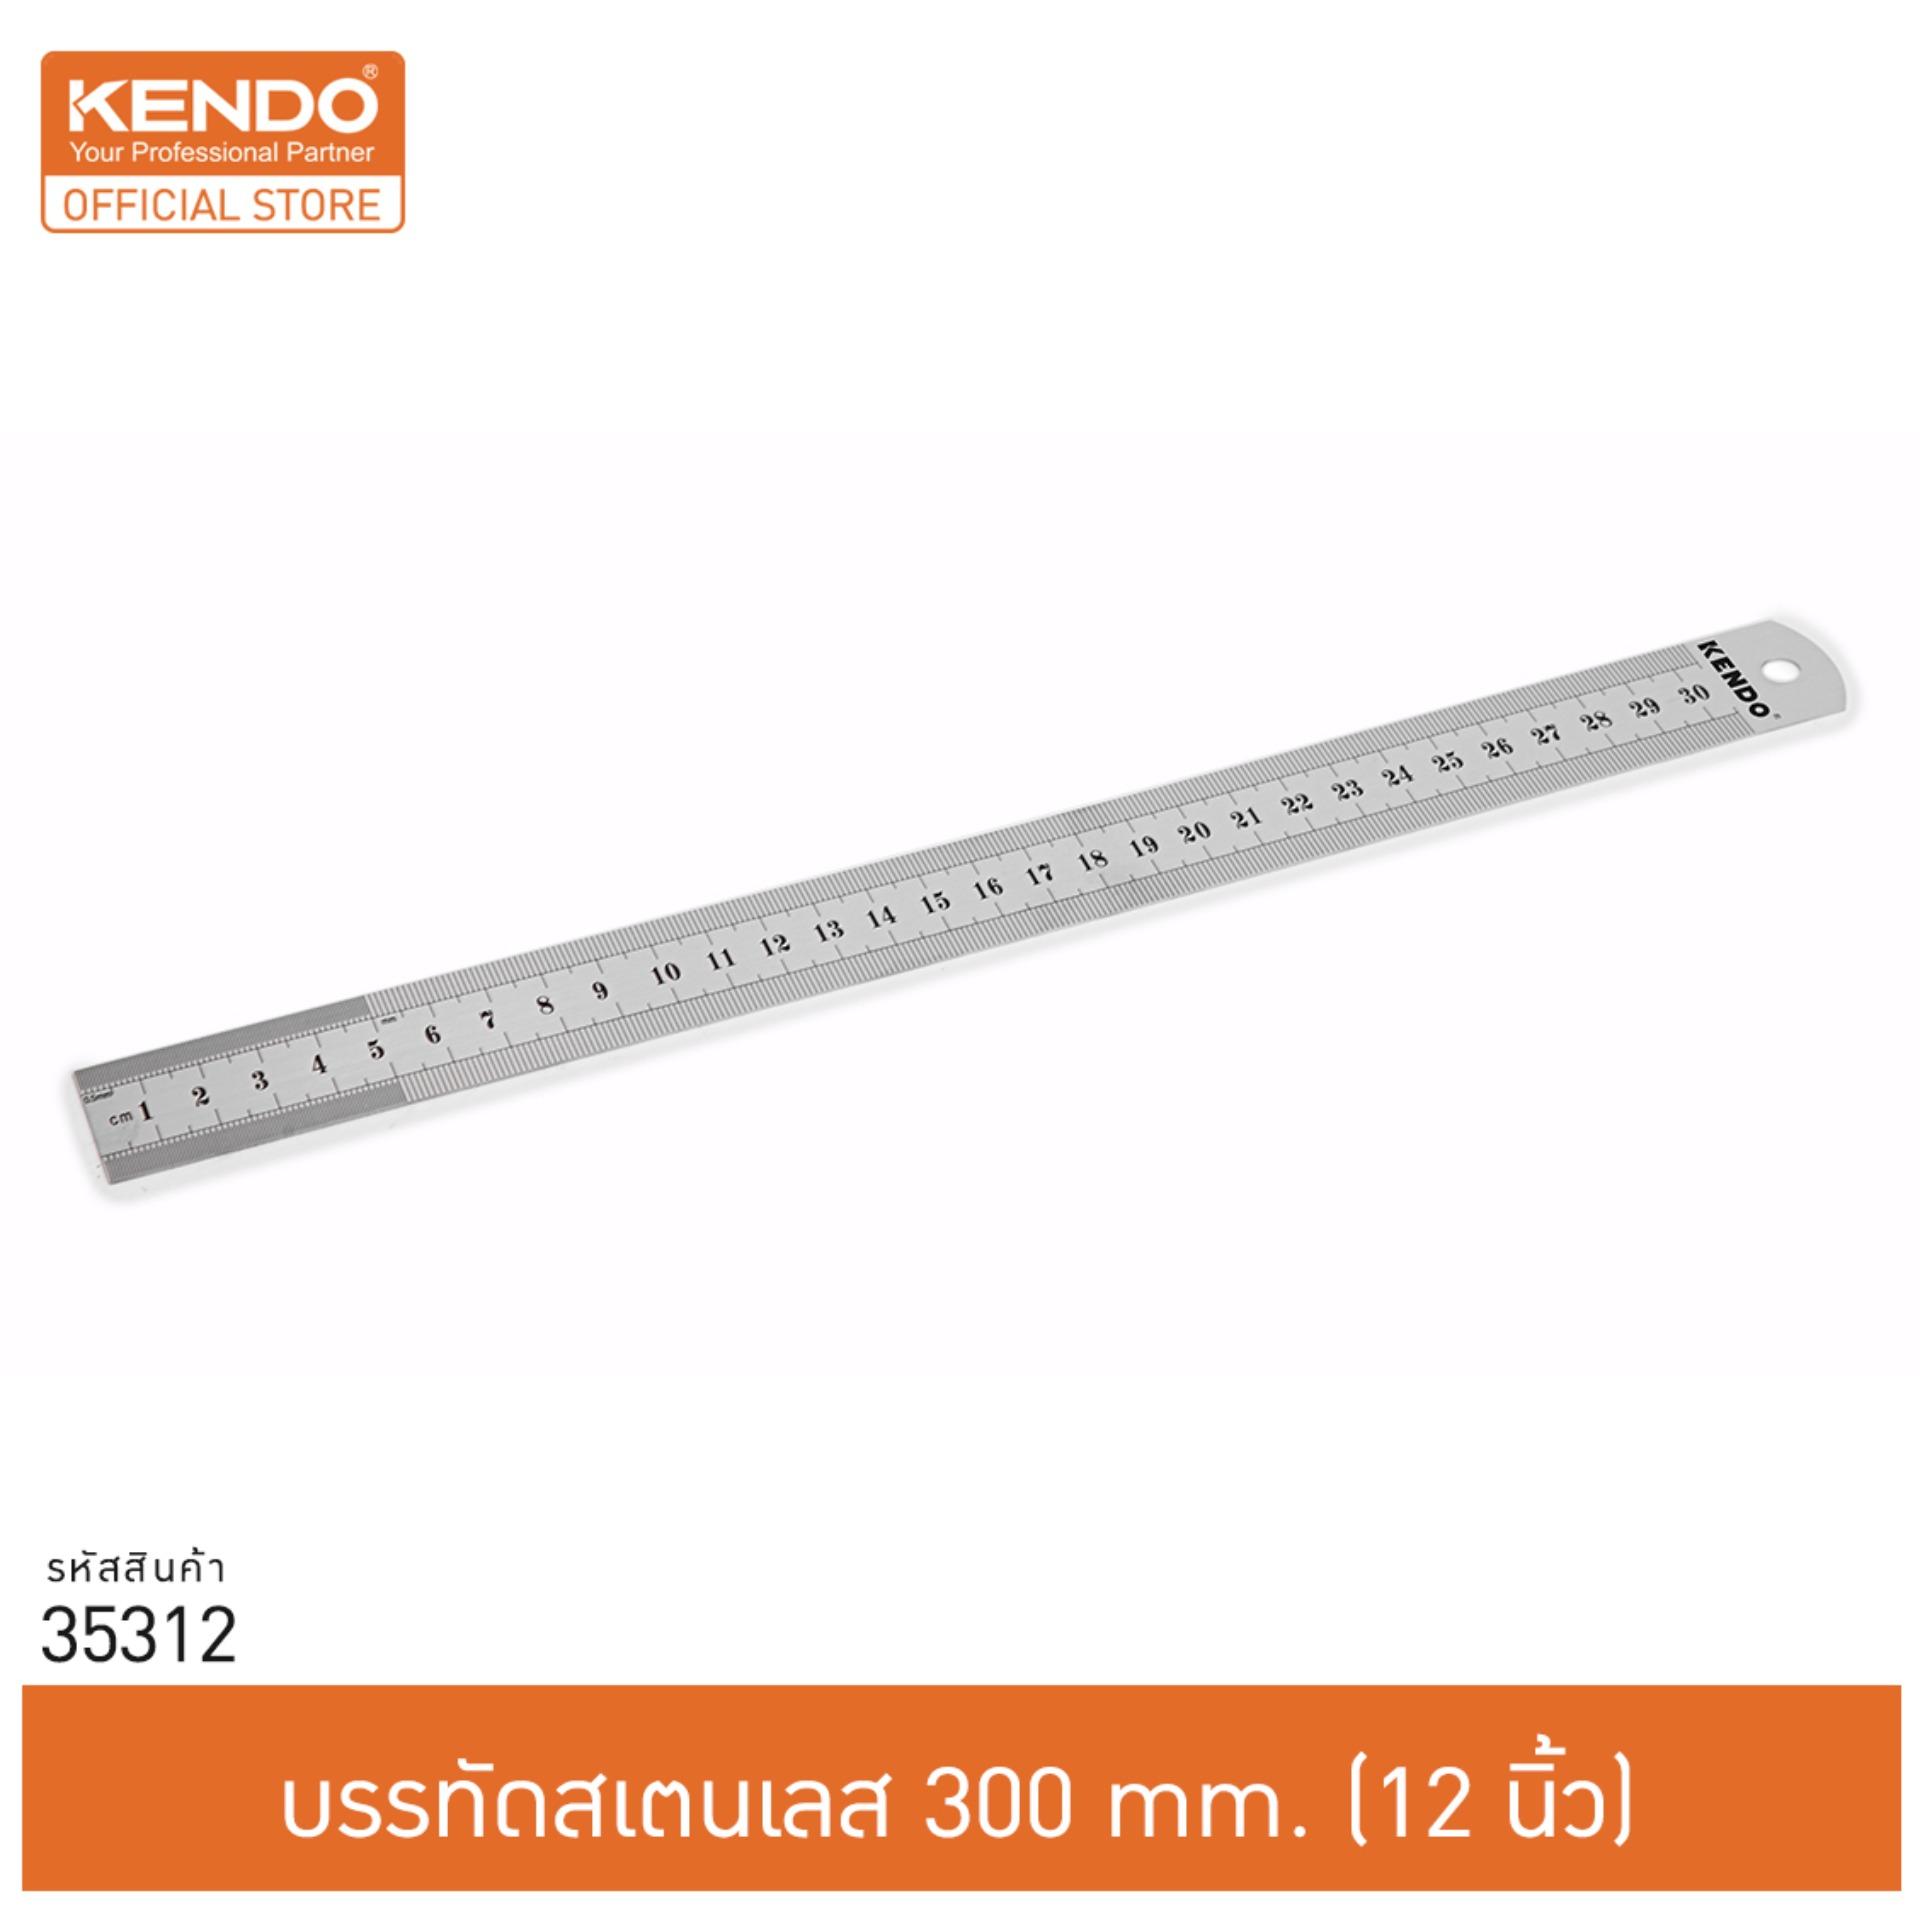 KENDO 35312 บรรทัดสเตนเลส 300mm. (12 )